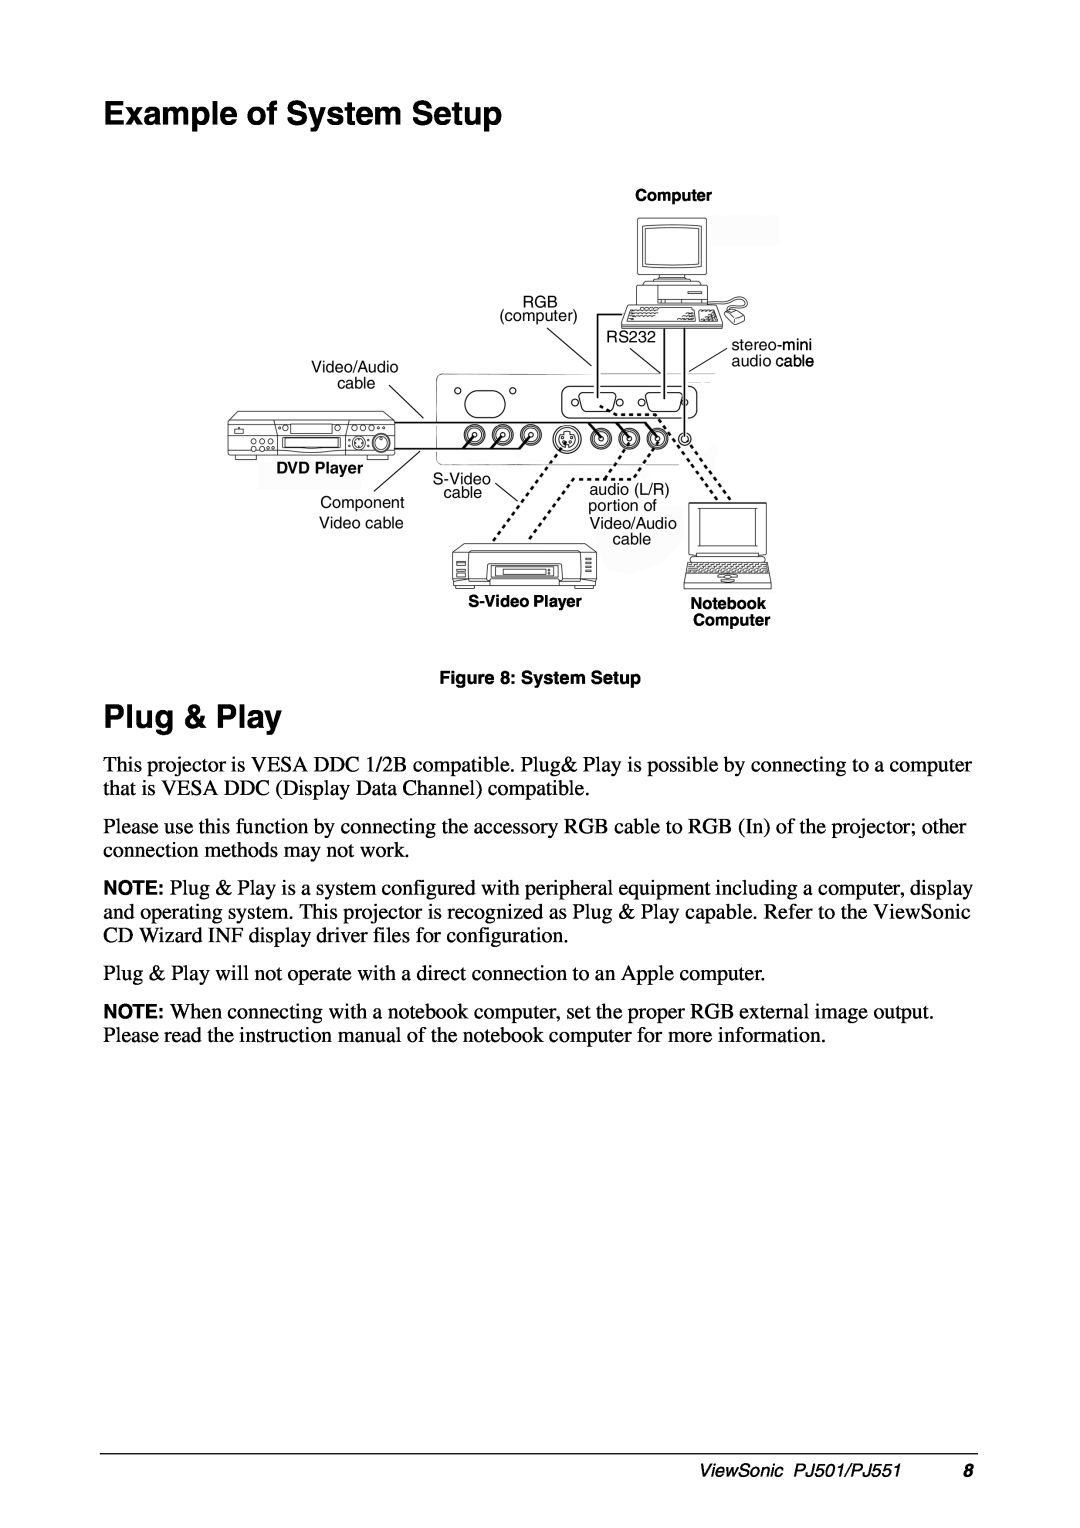 ViewSonic PJ551, PJ501 manual Example of System Setup, Plug & Play 